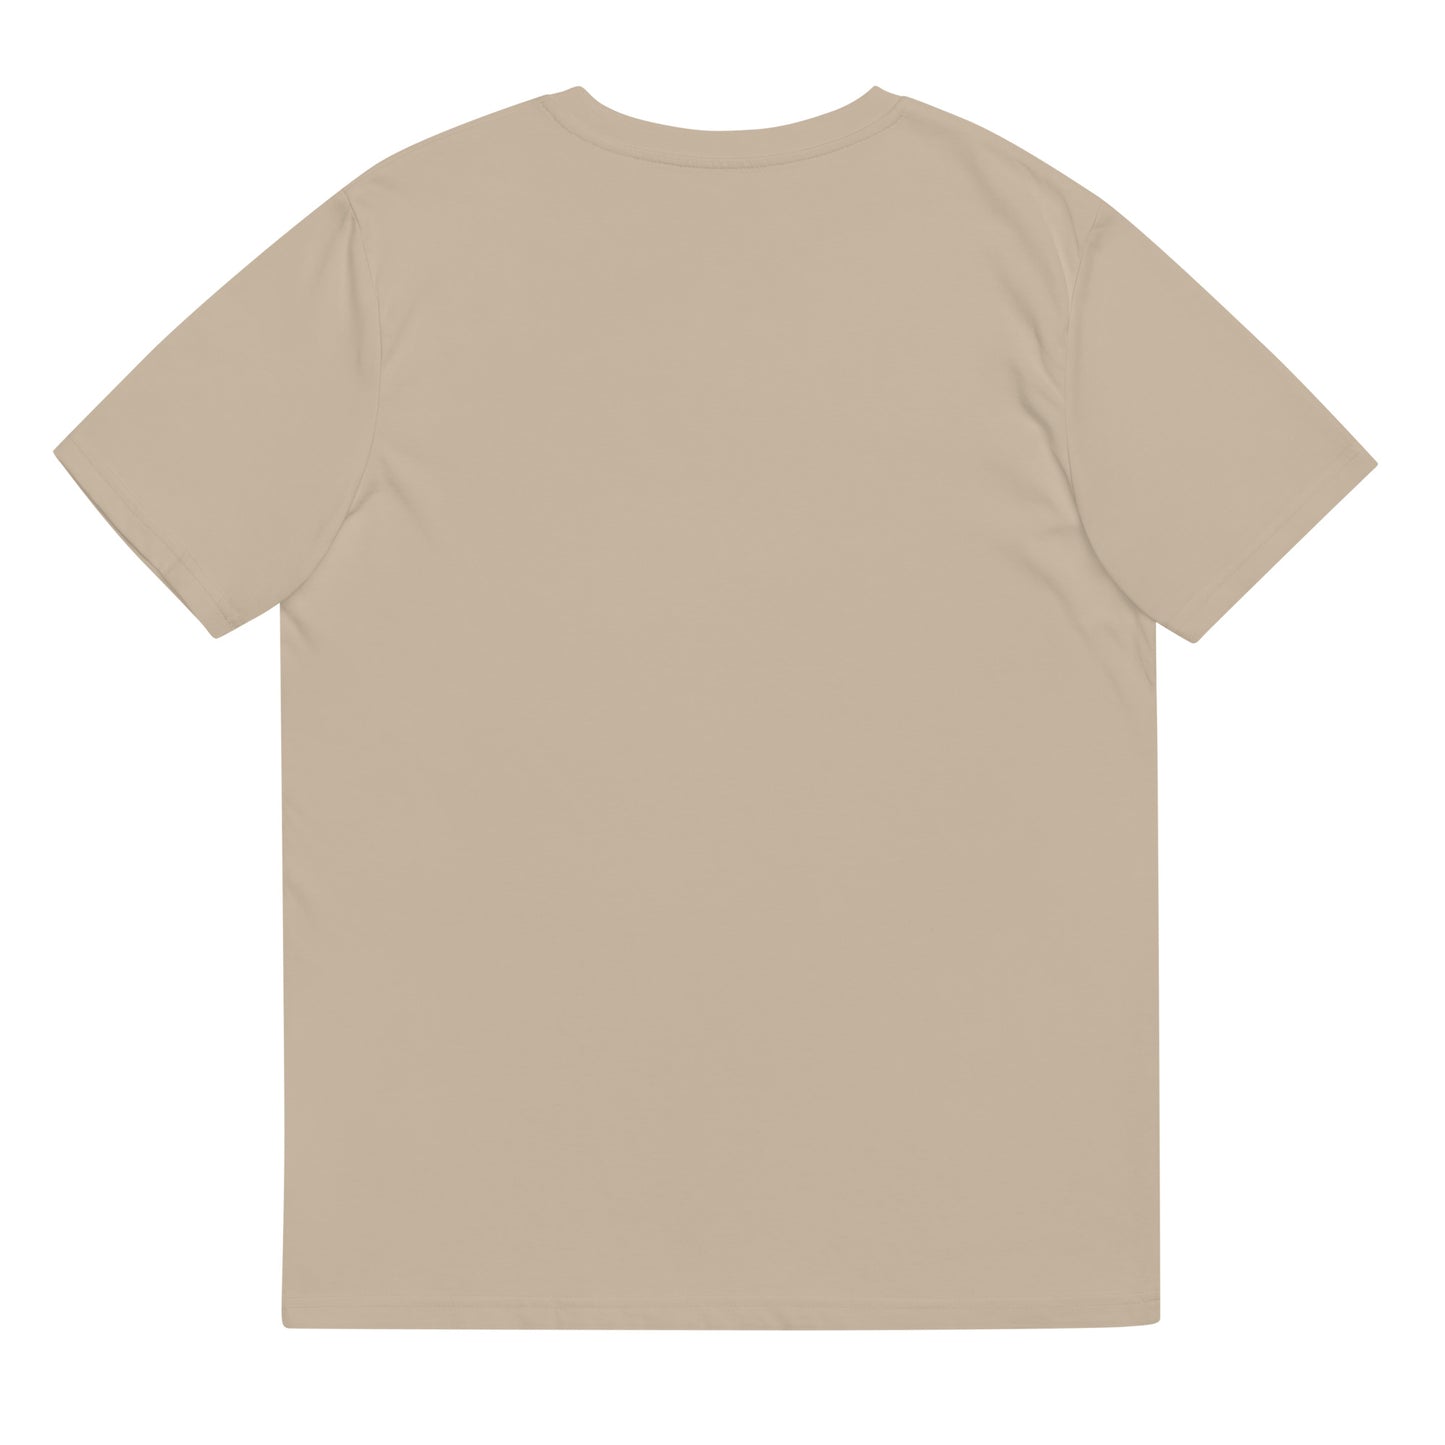 Unisex organic cotton t-shirt - House of S & N